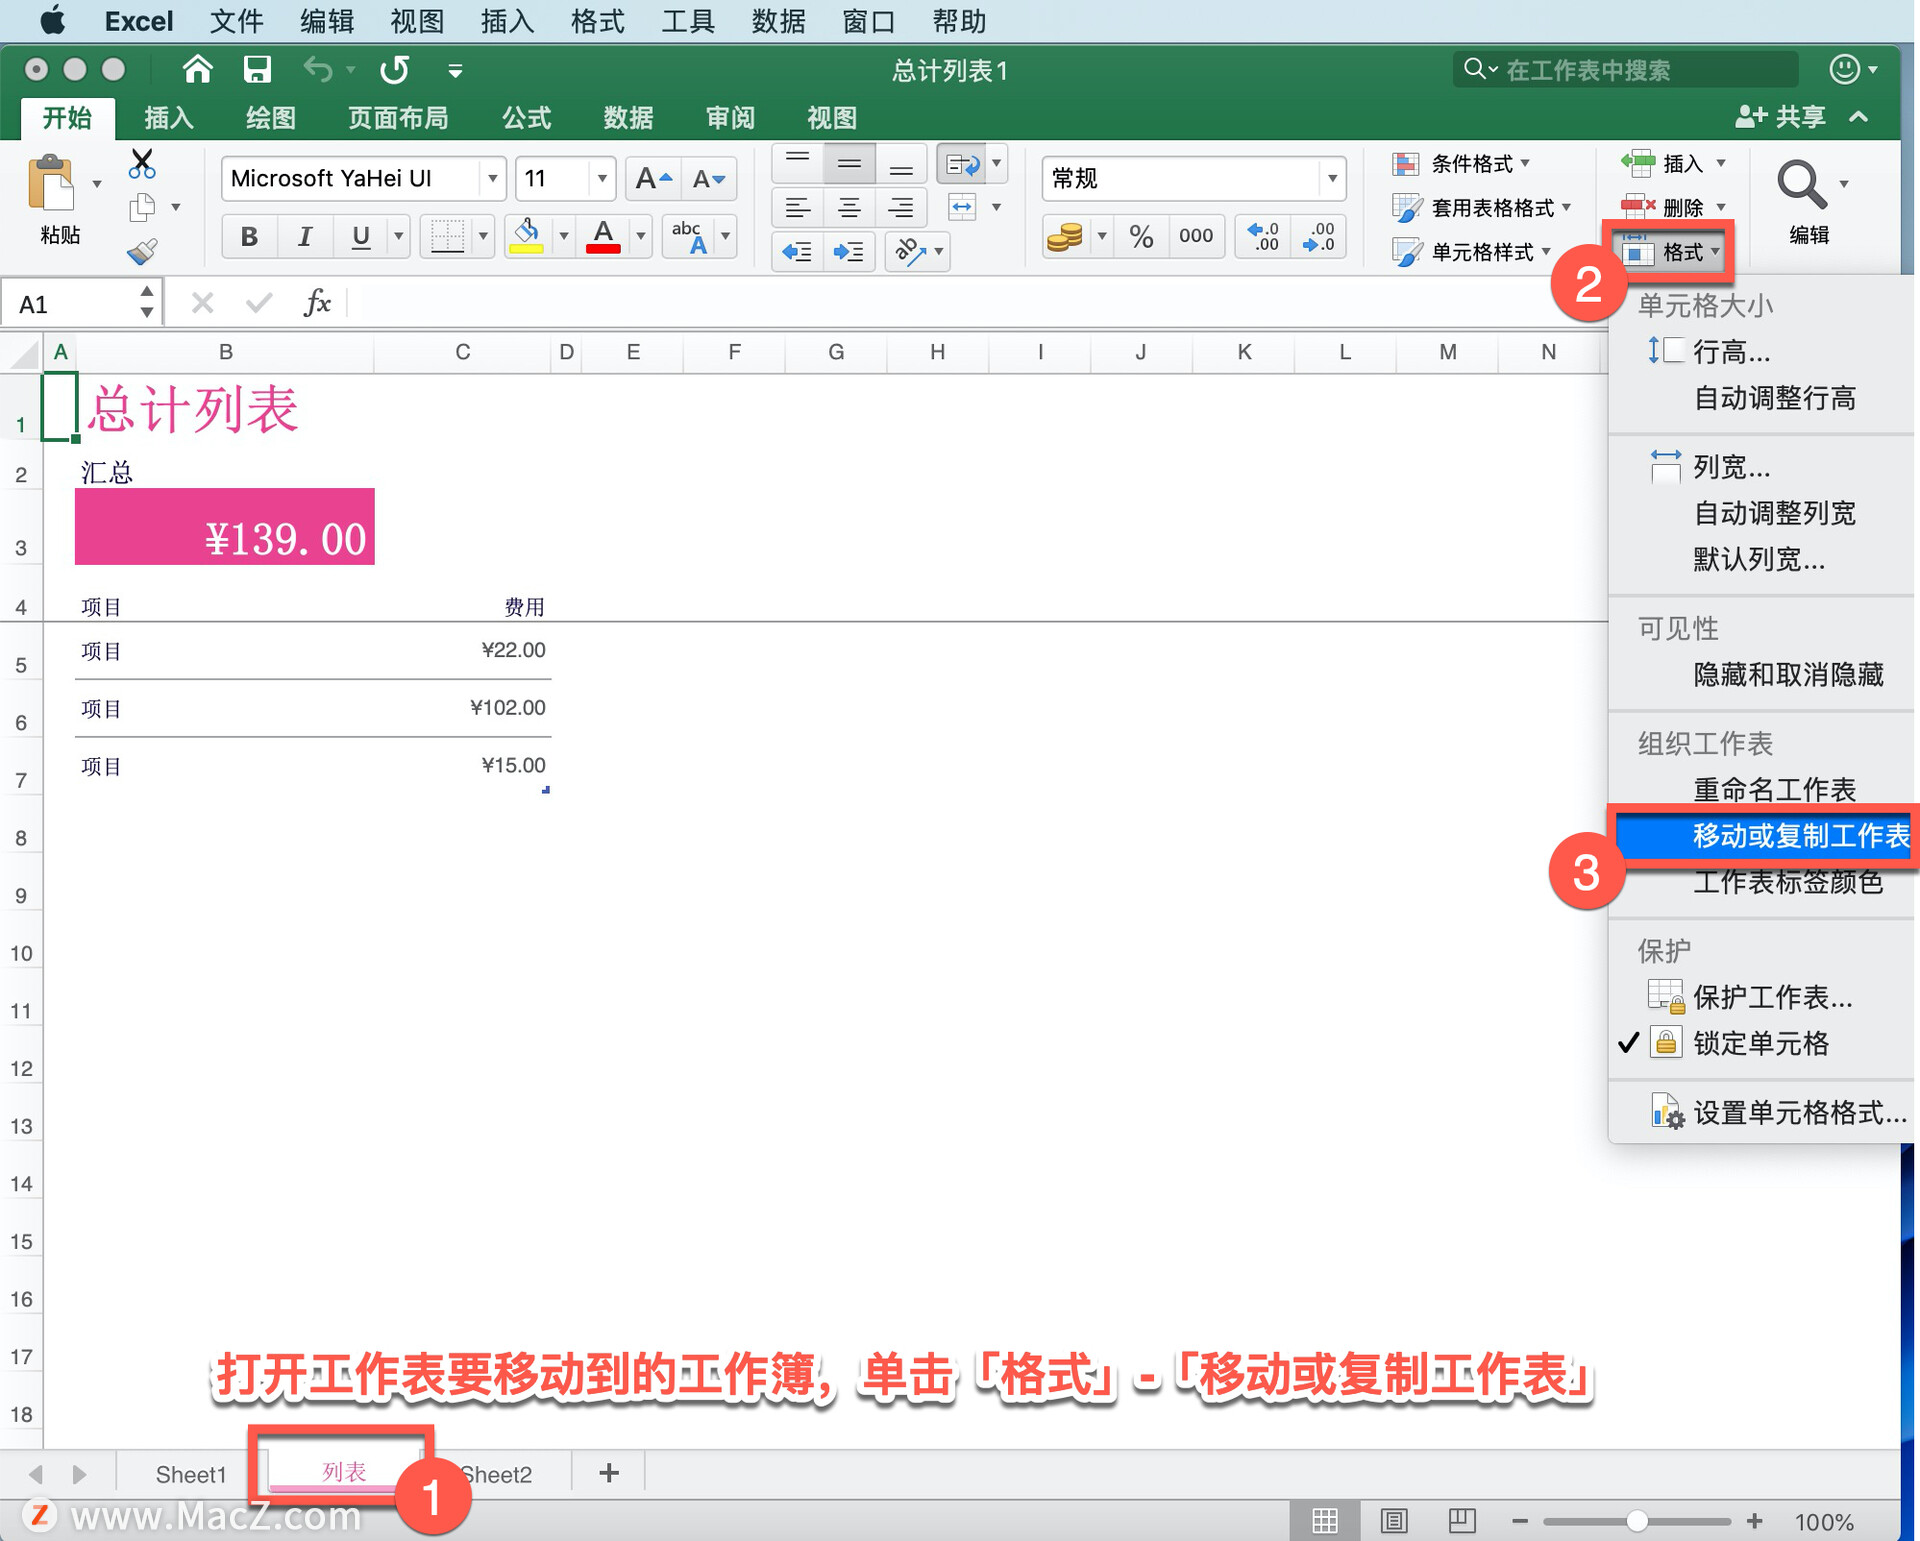 Microsoft Excel 教程「2」：如何在 Excel 中移动或复制工作表或工作表数据？